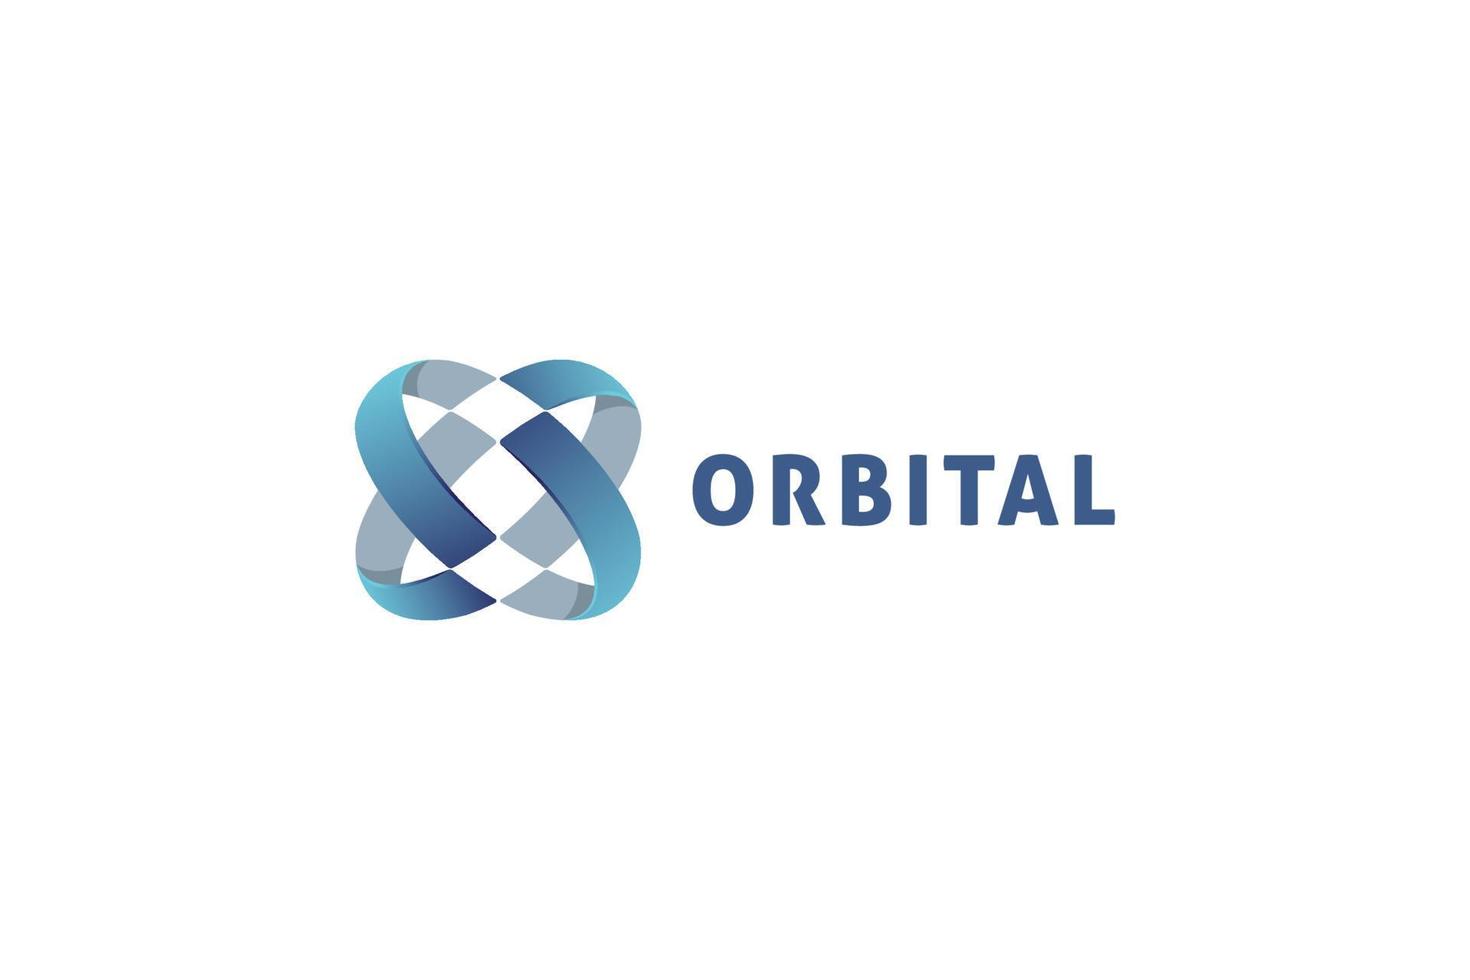 Abstract orbital Technology business logo design vector